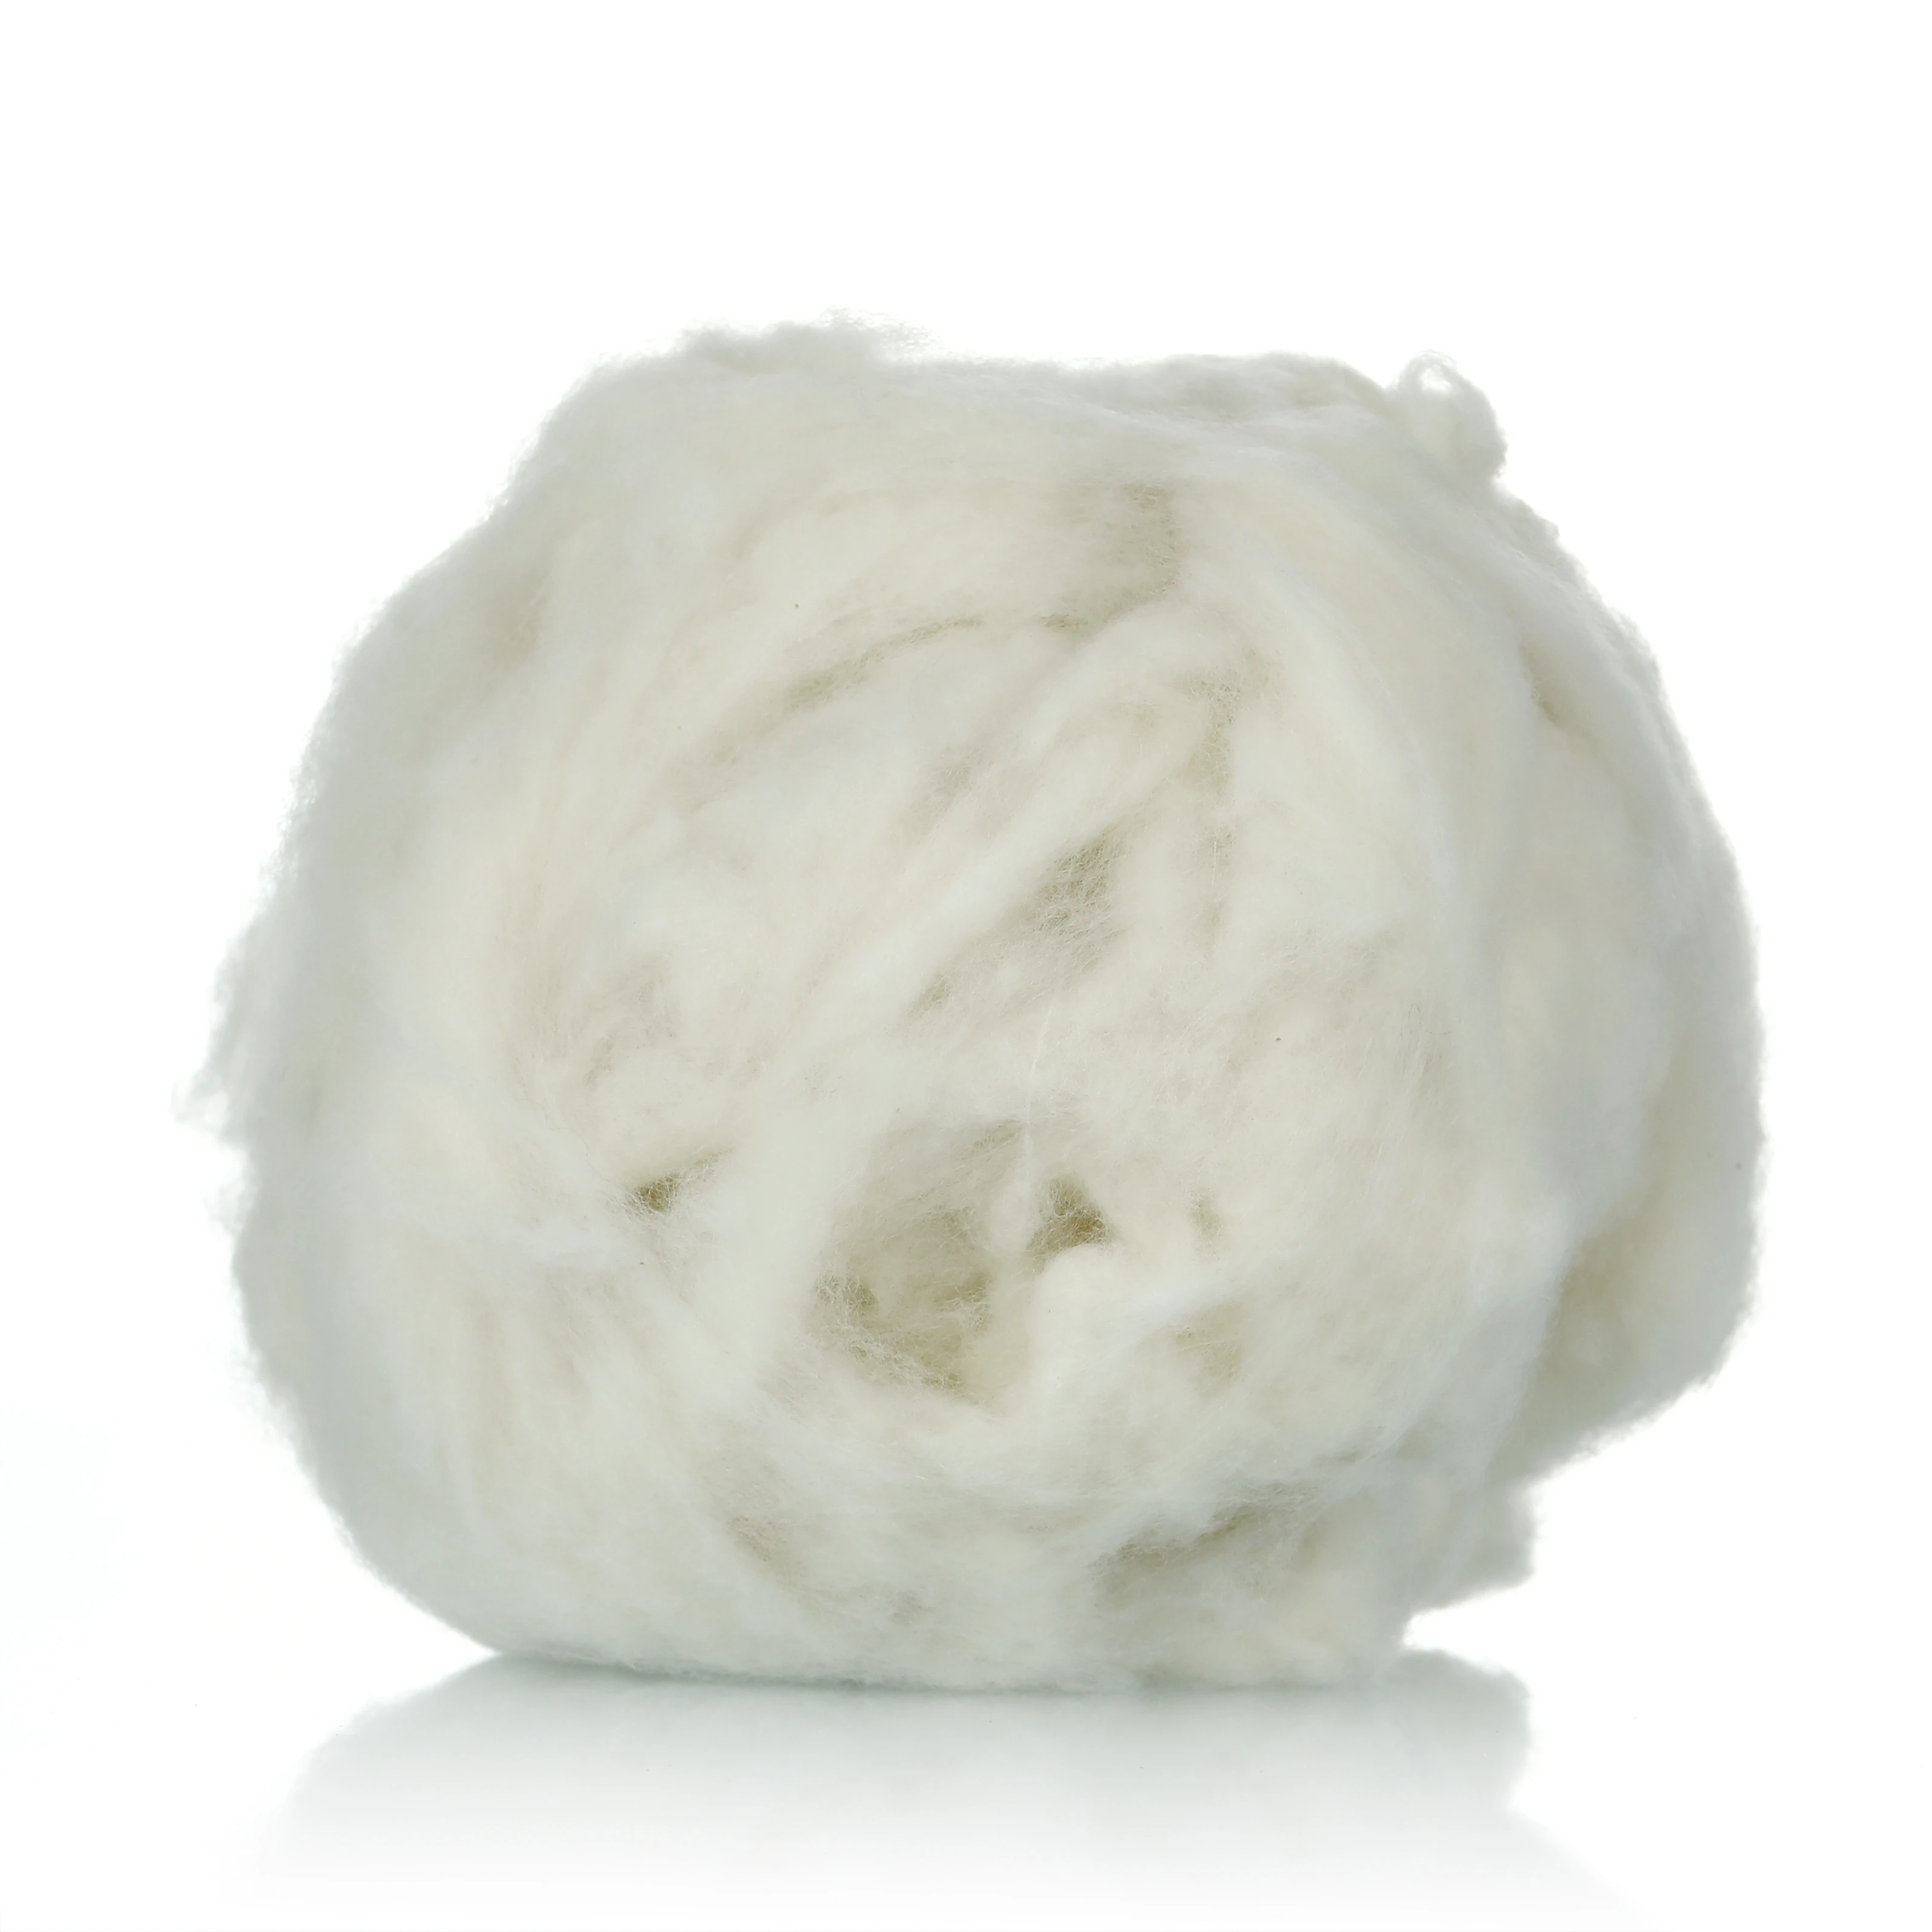 Cheap dehaired natural white goat cashmere fiber